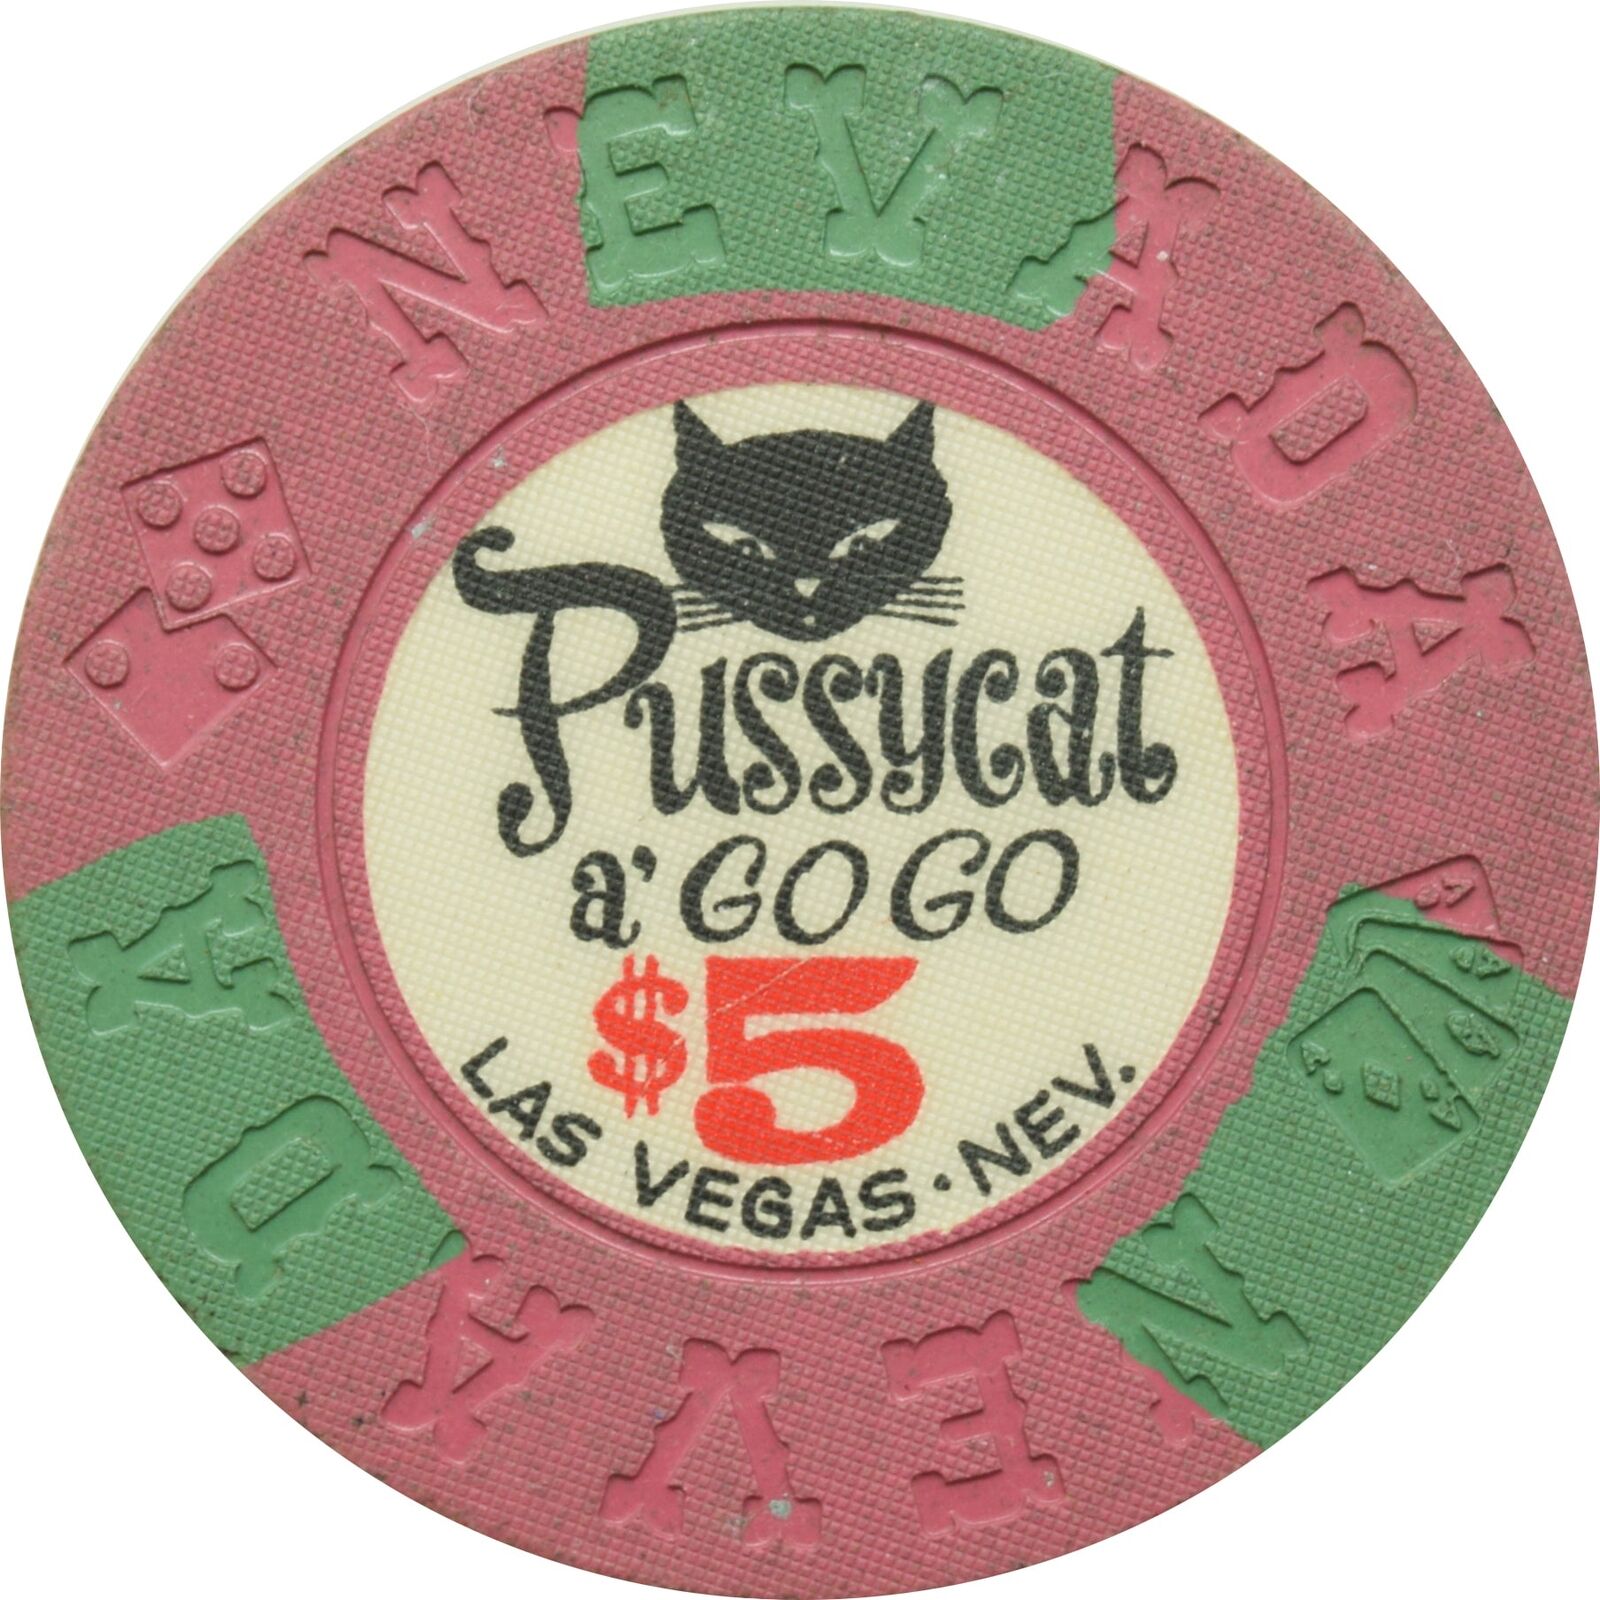 Pussycat a\' Go-Go Casino Las Vegas Nevada $5 Inlay Chip 1964